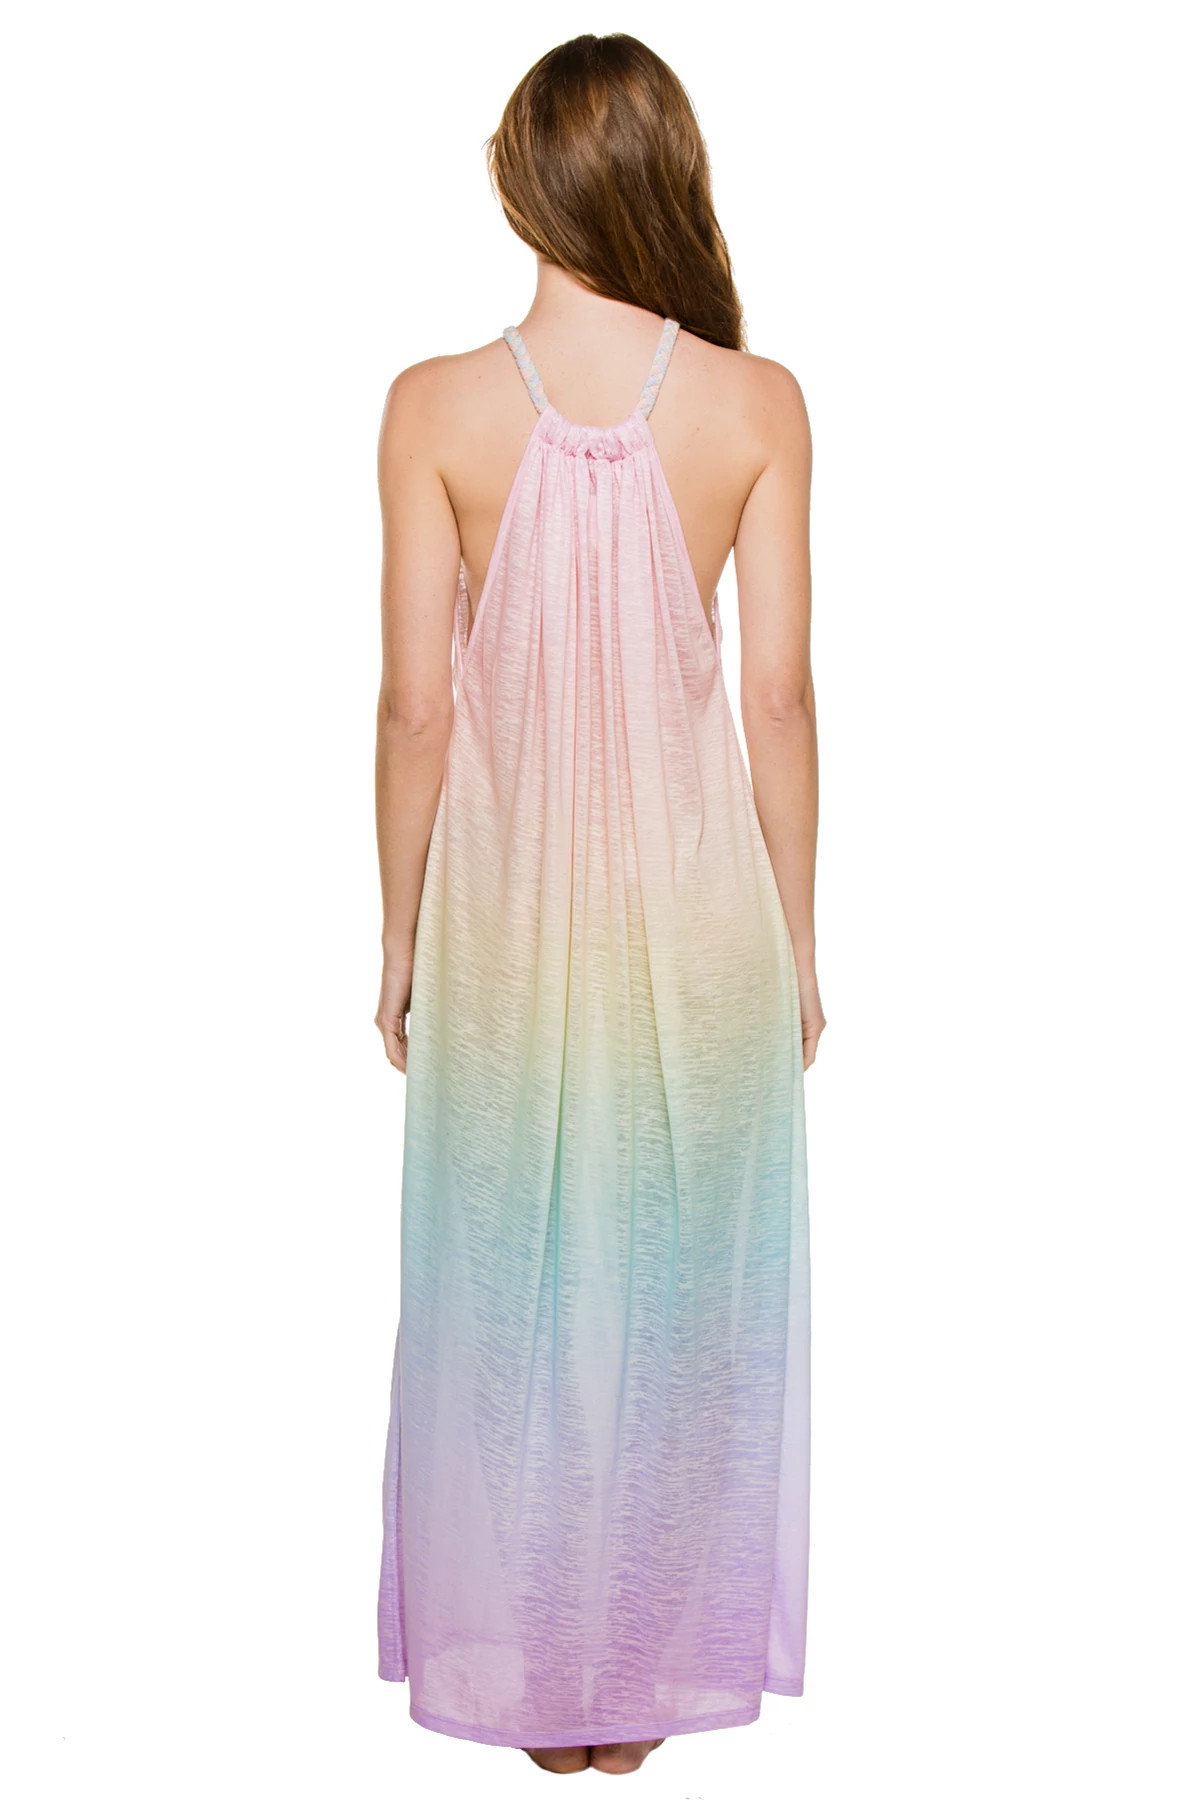 PASTEL Aegean Ombre Rainbow Maxi Dress image number 2